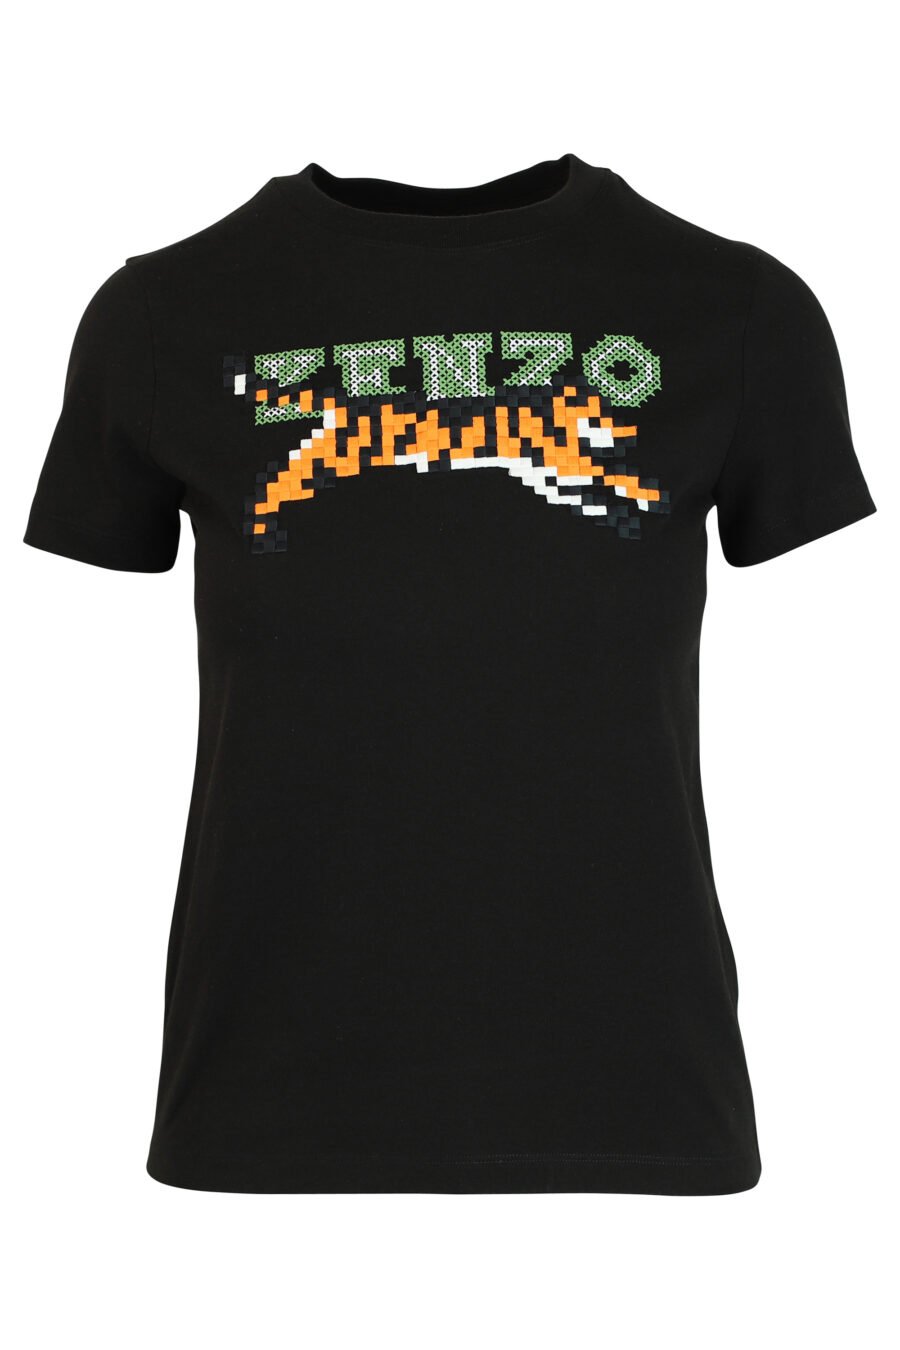 Black t-shirt with tiger maxilogo - 3612230460195